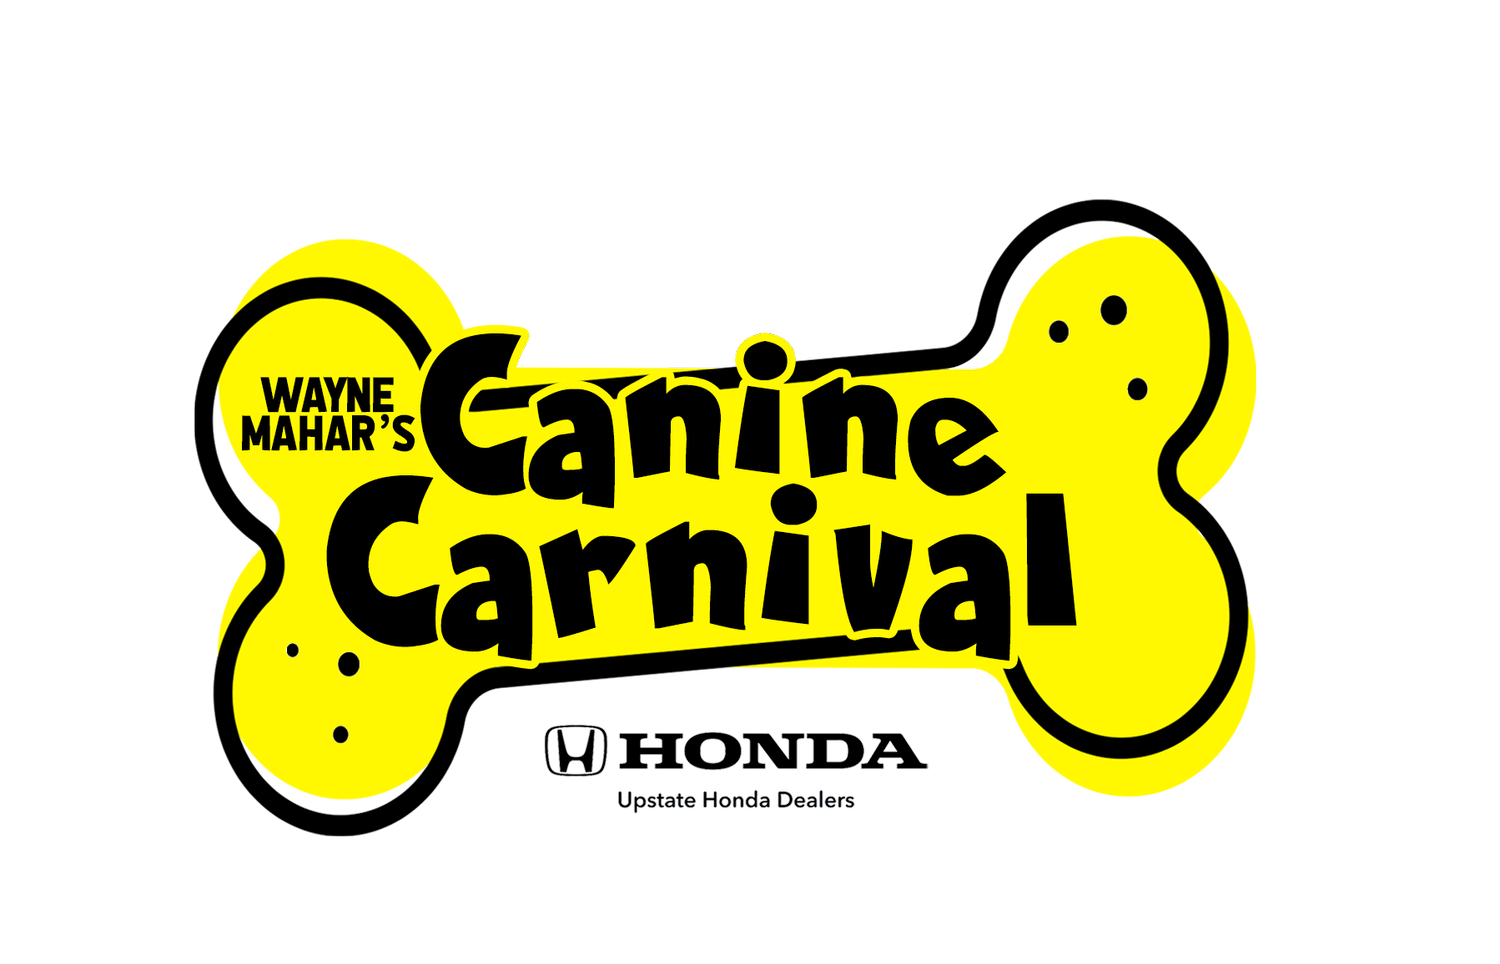 Canine Carnival